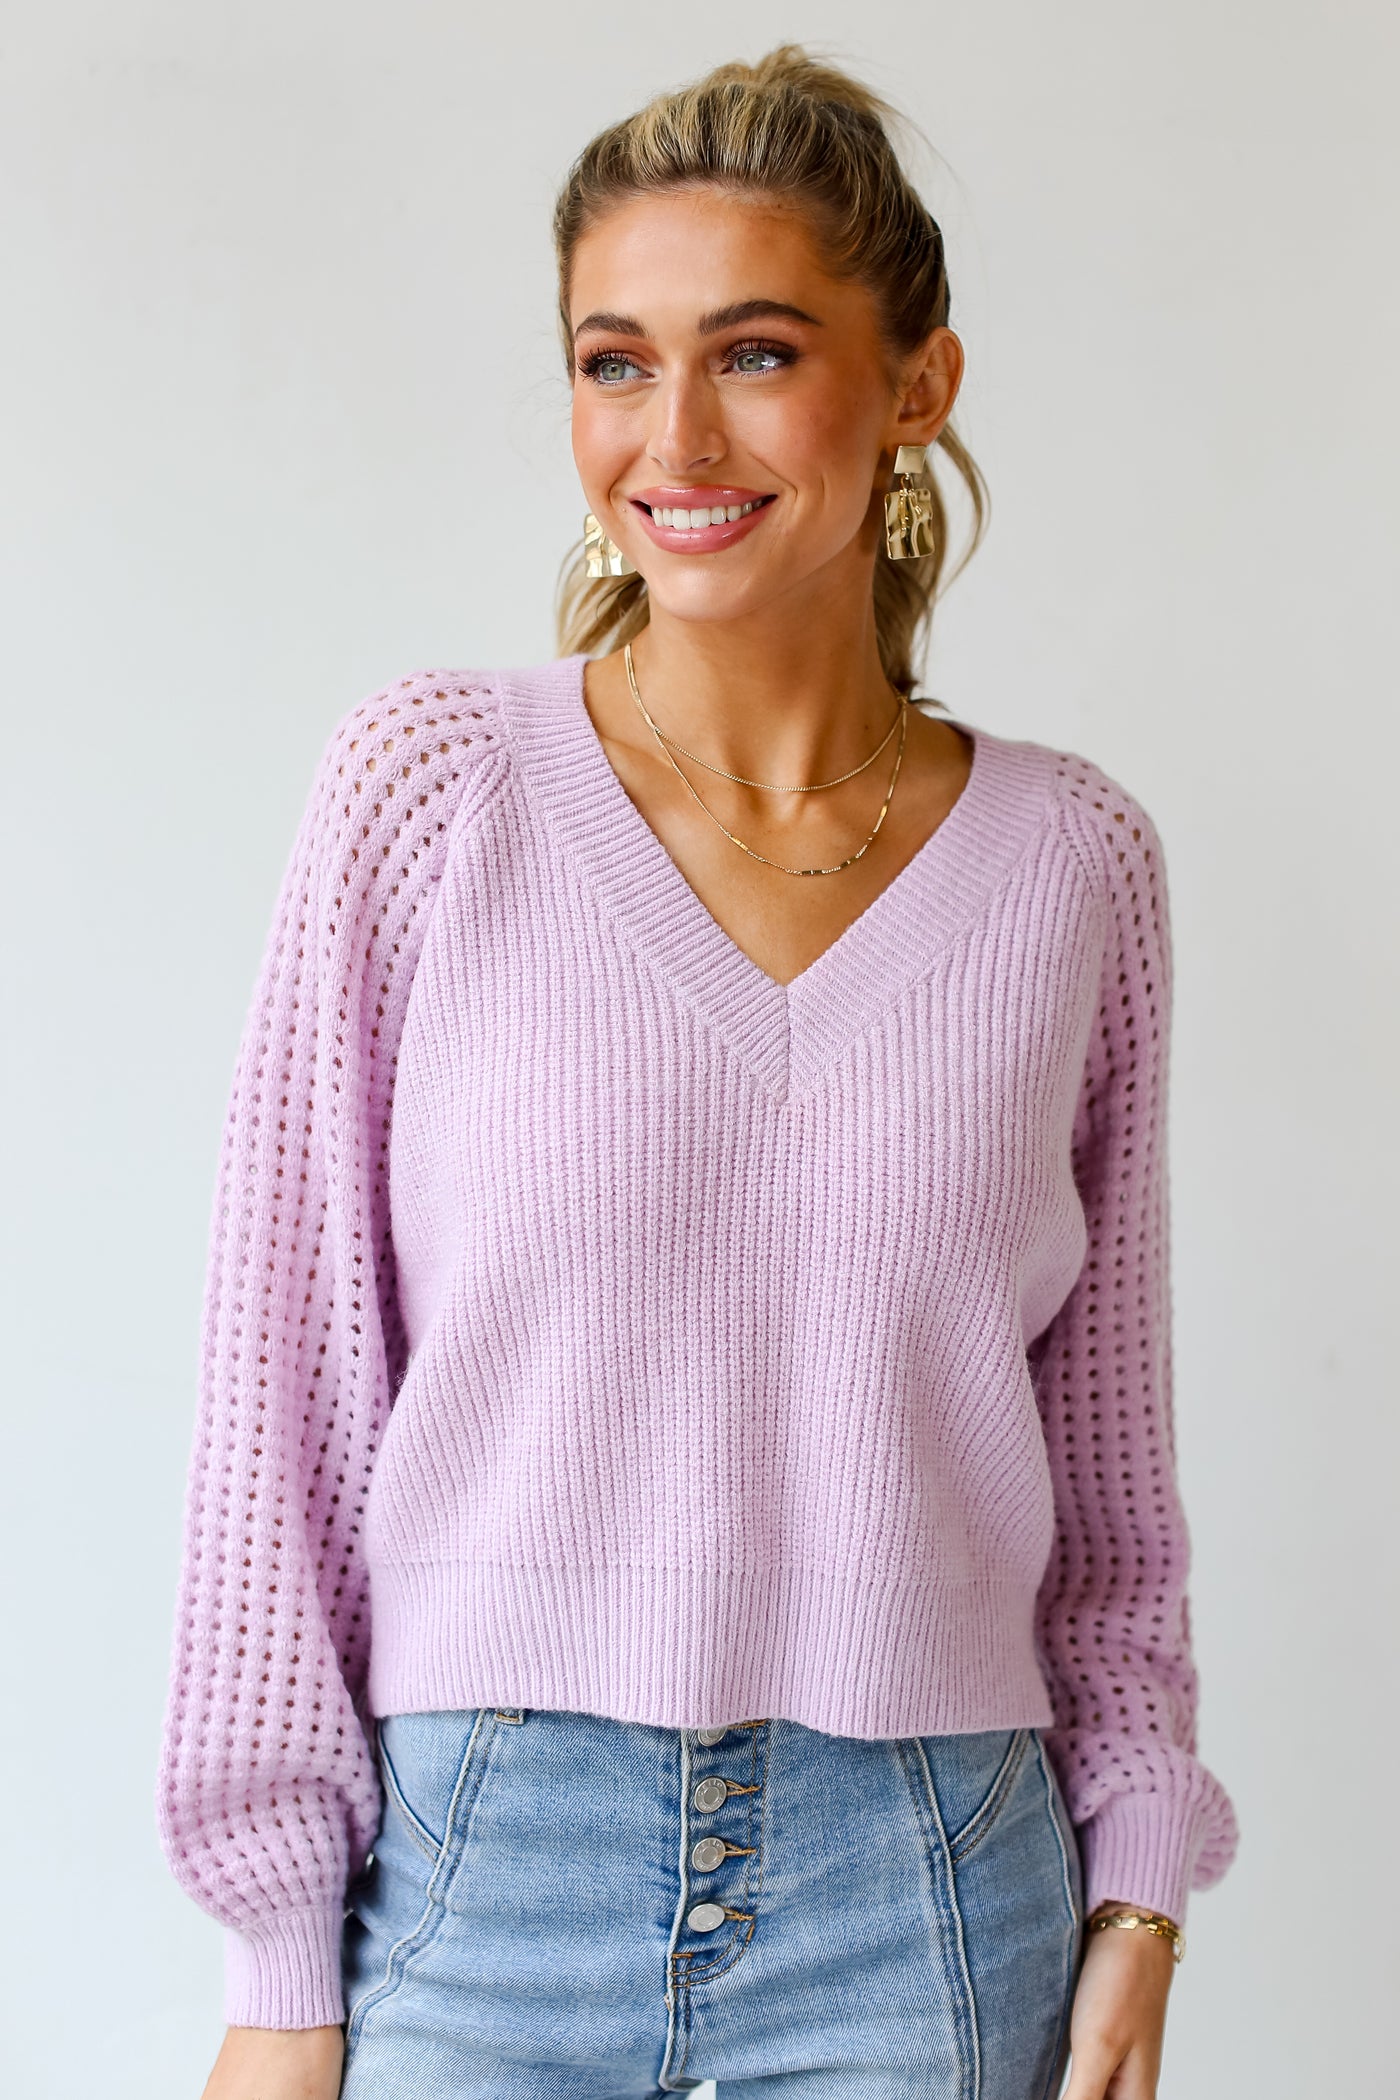 lilac Sweater close up